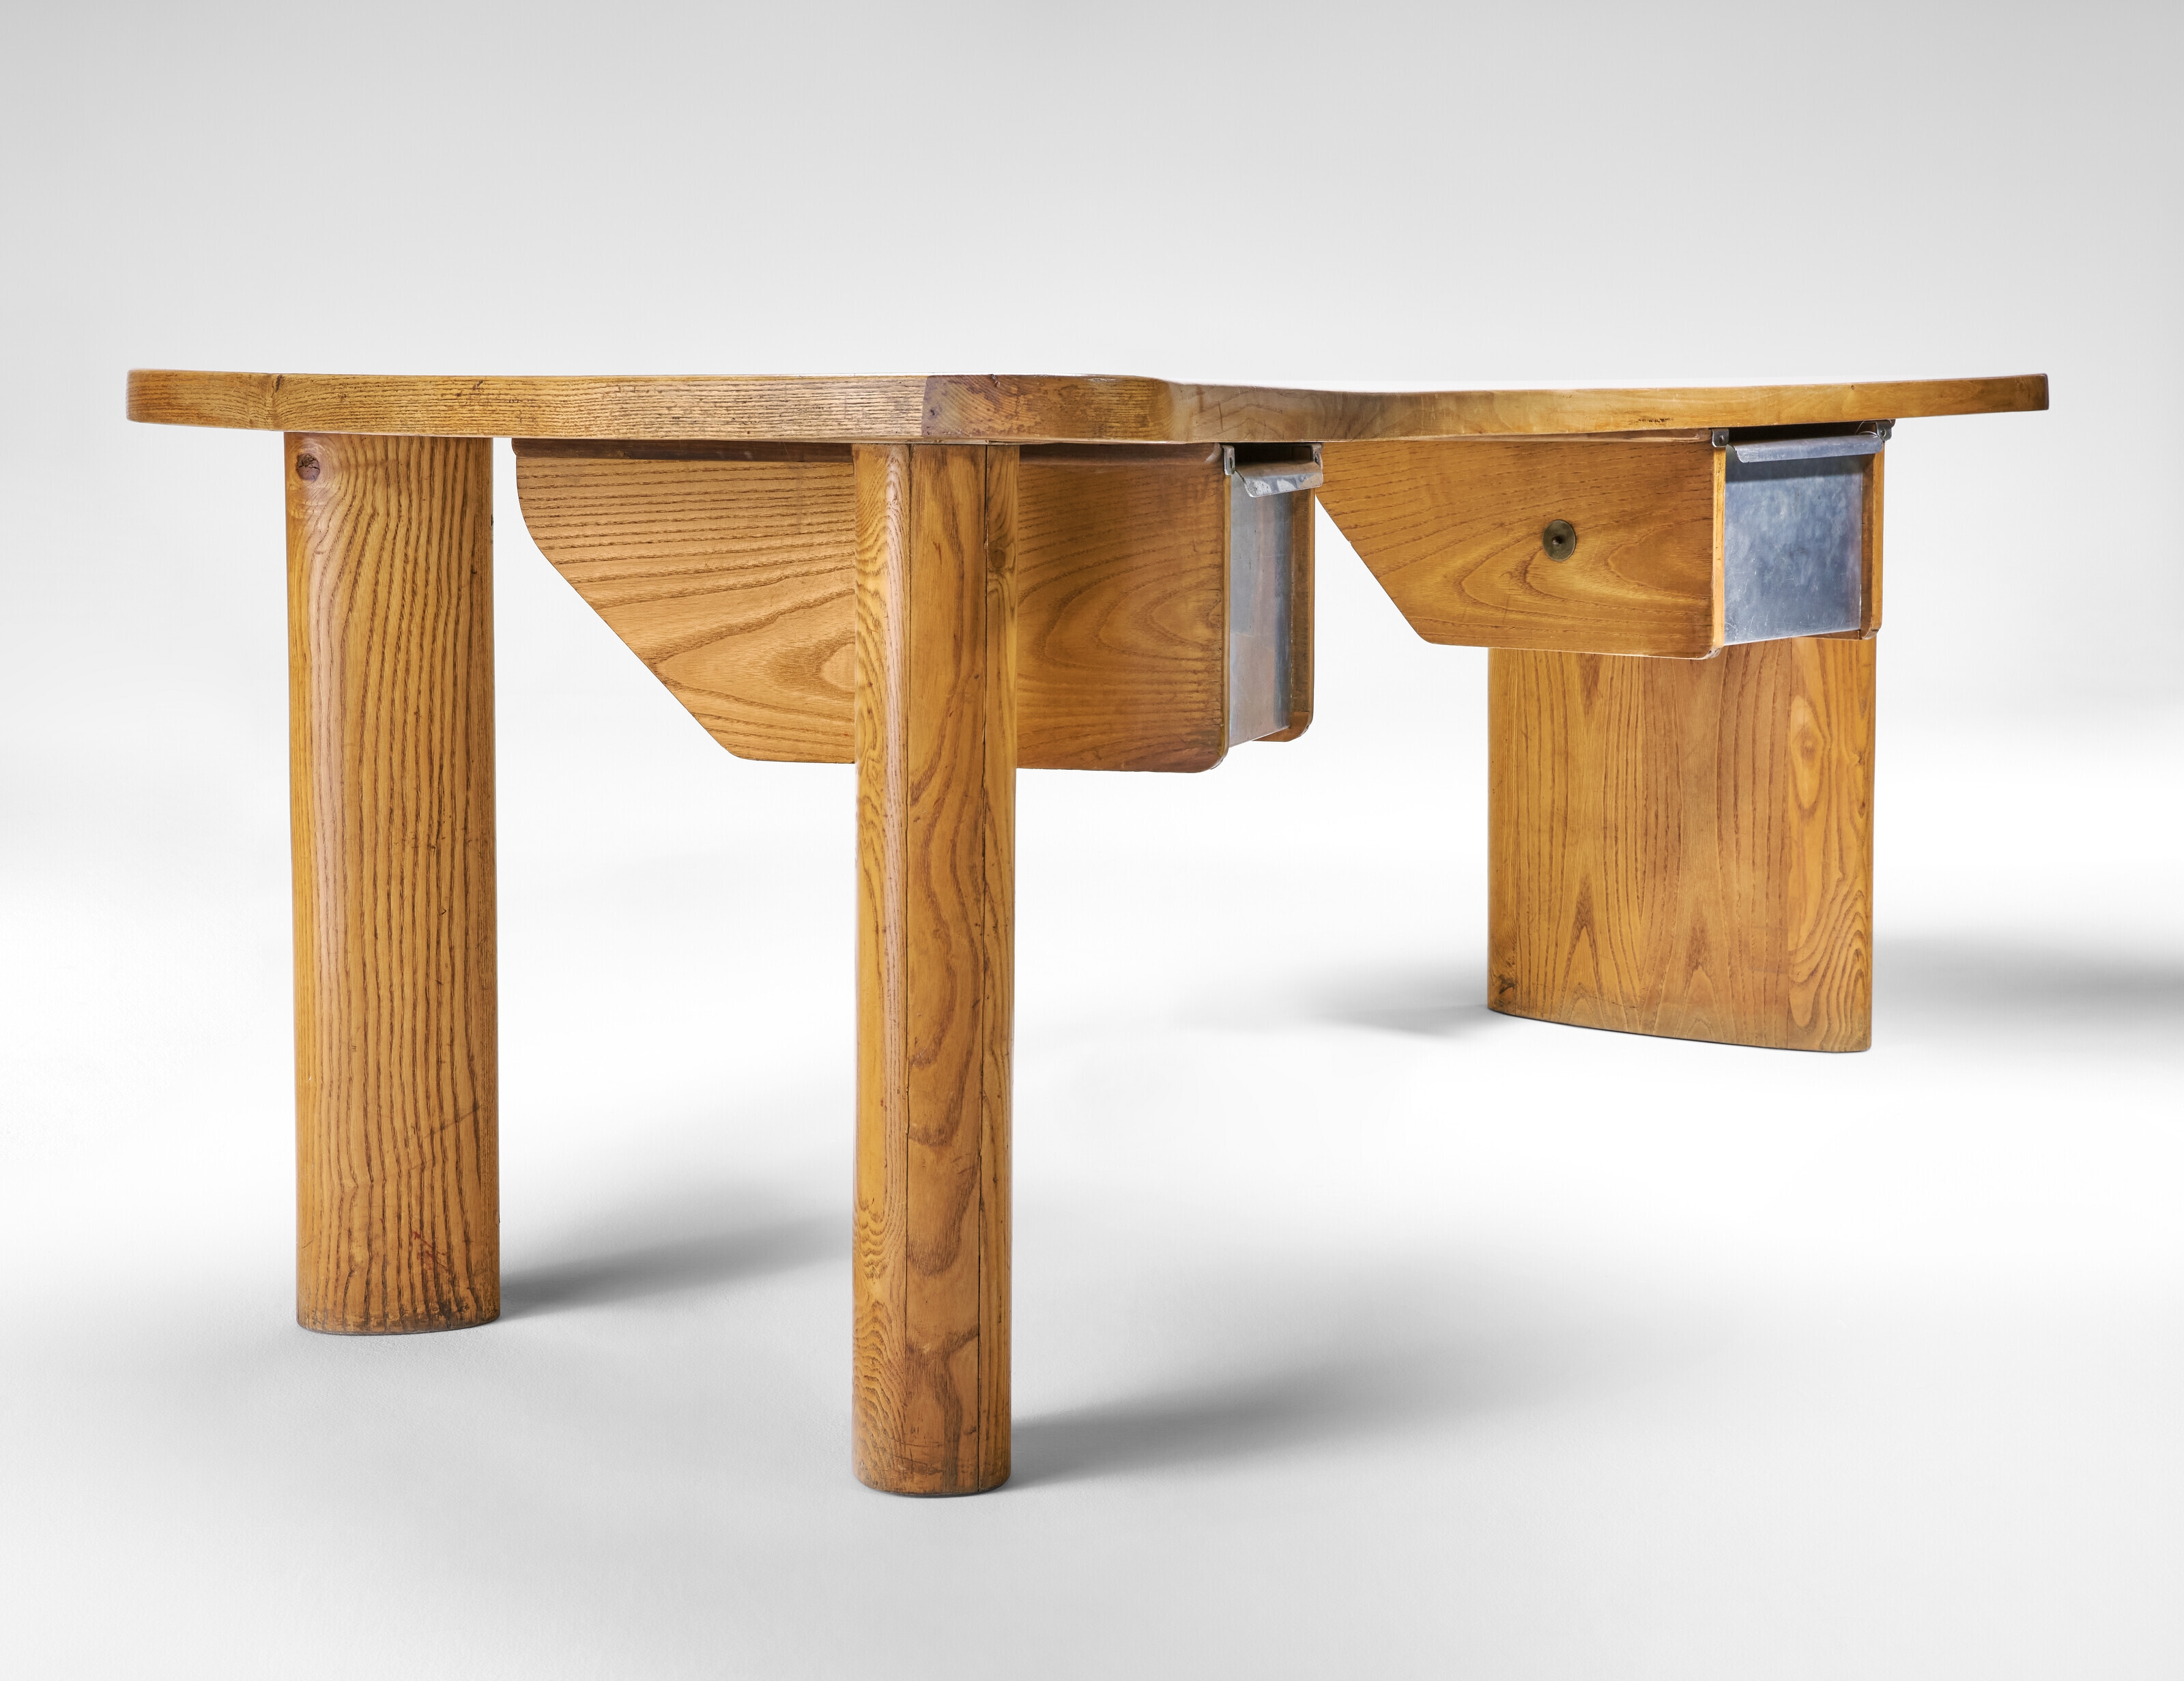 Forme Libre” Desk, cherry wood, circa 1962